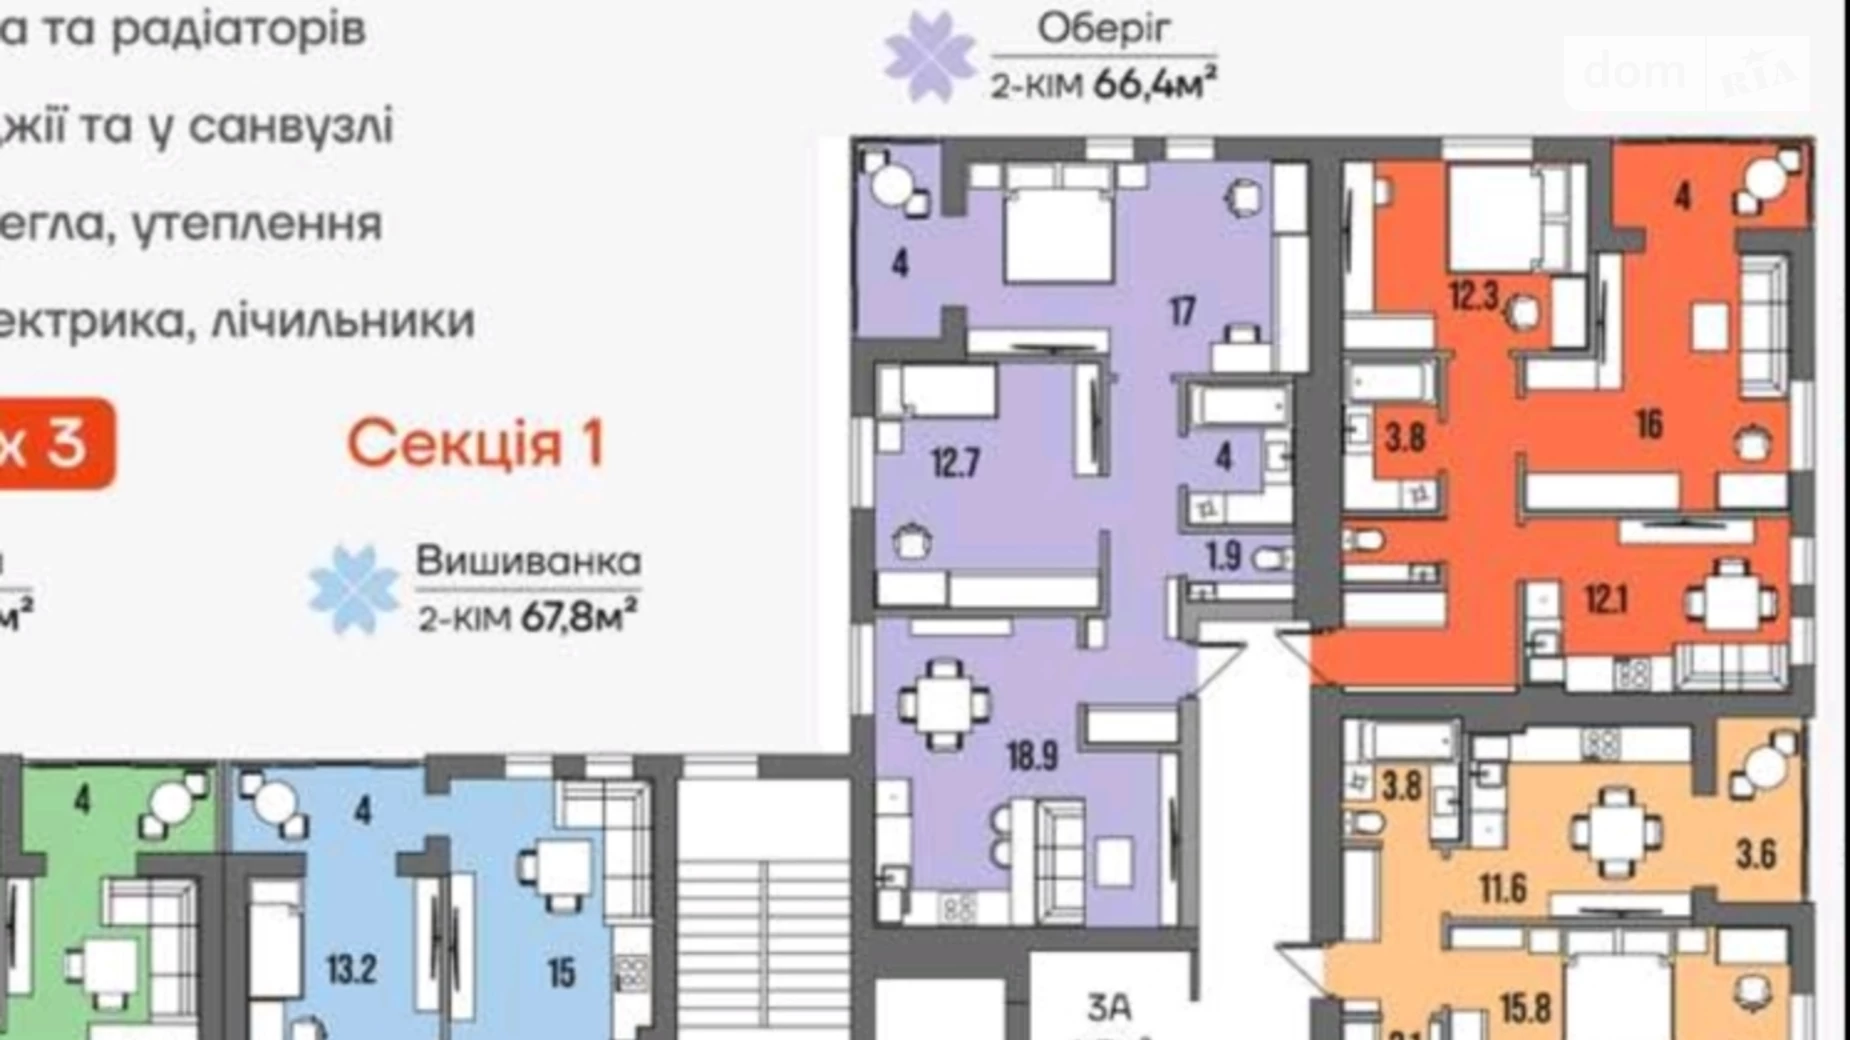 1-кімнатна квартира 45.8 кв. м у Луцьку, вул. Левадна, 1 - фото 3